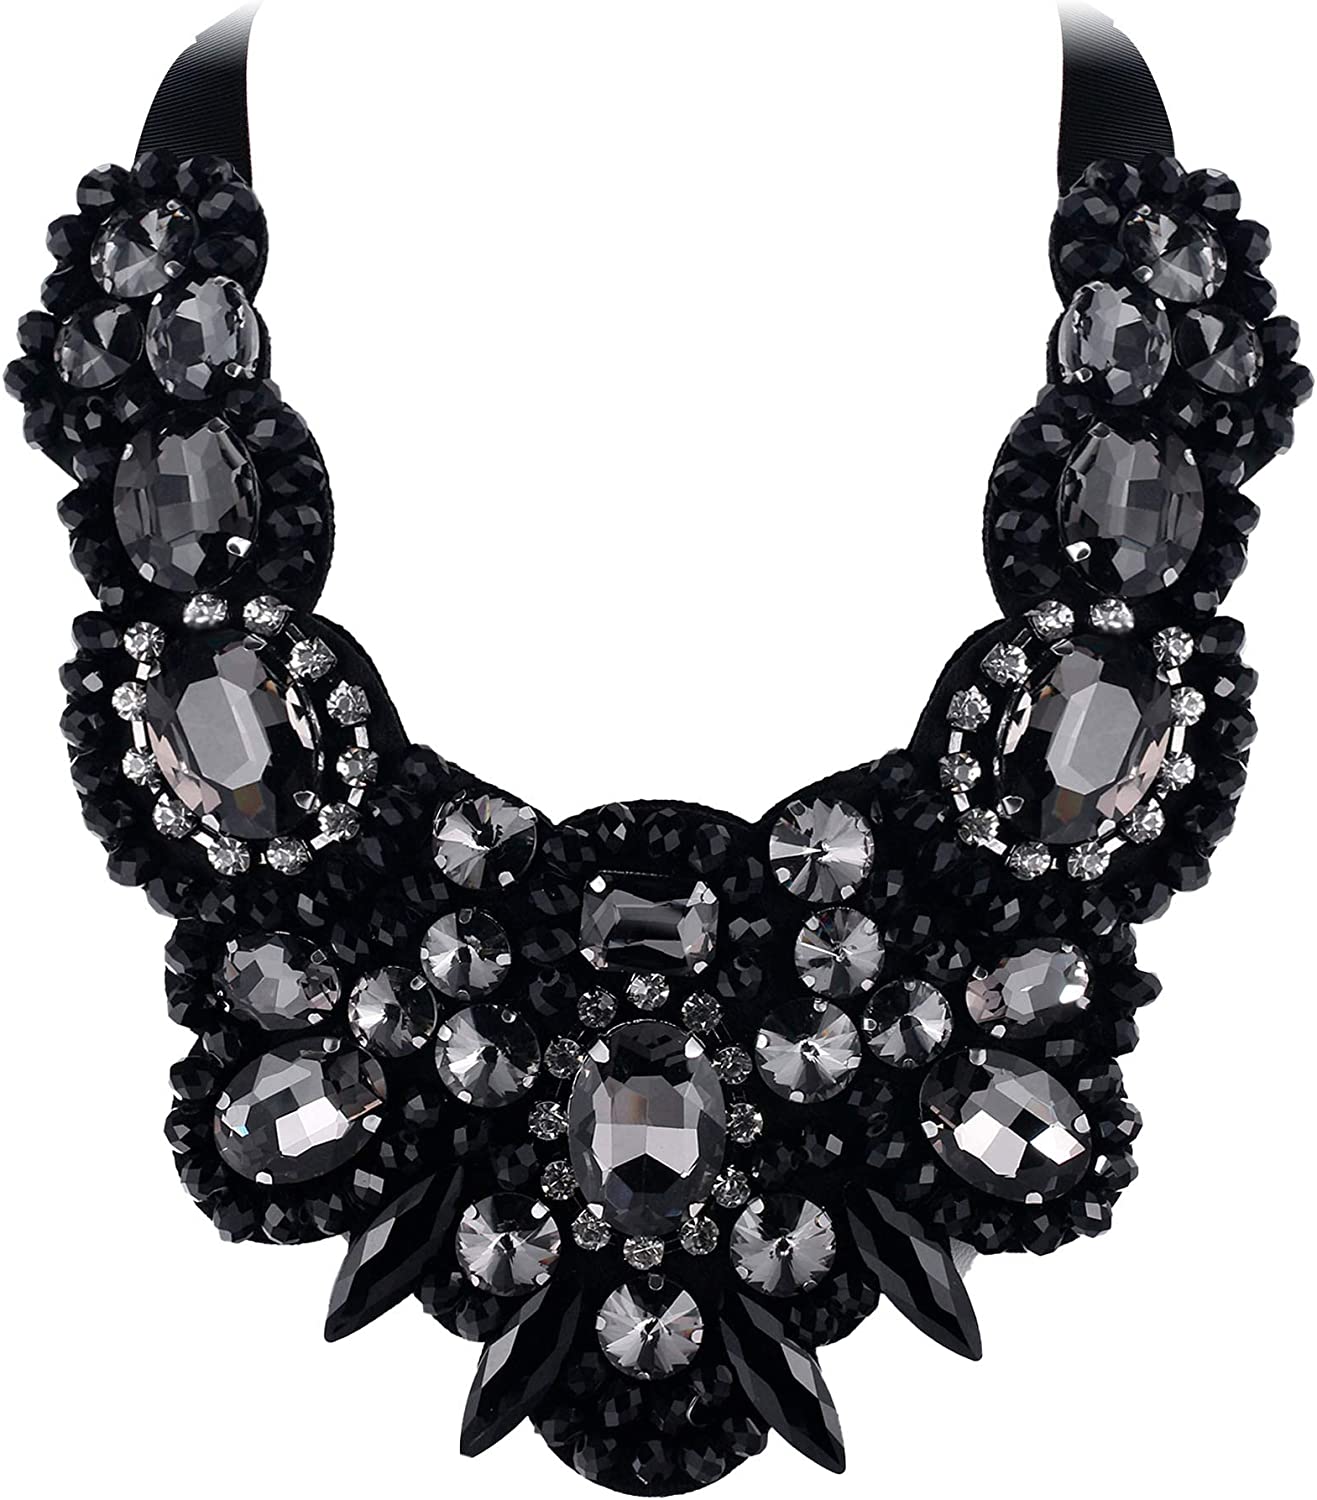 Black bib ribbon necklace